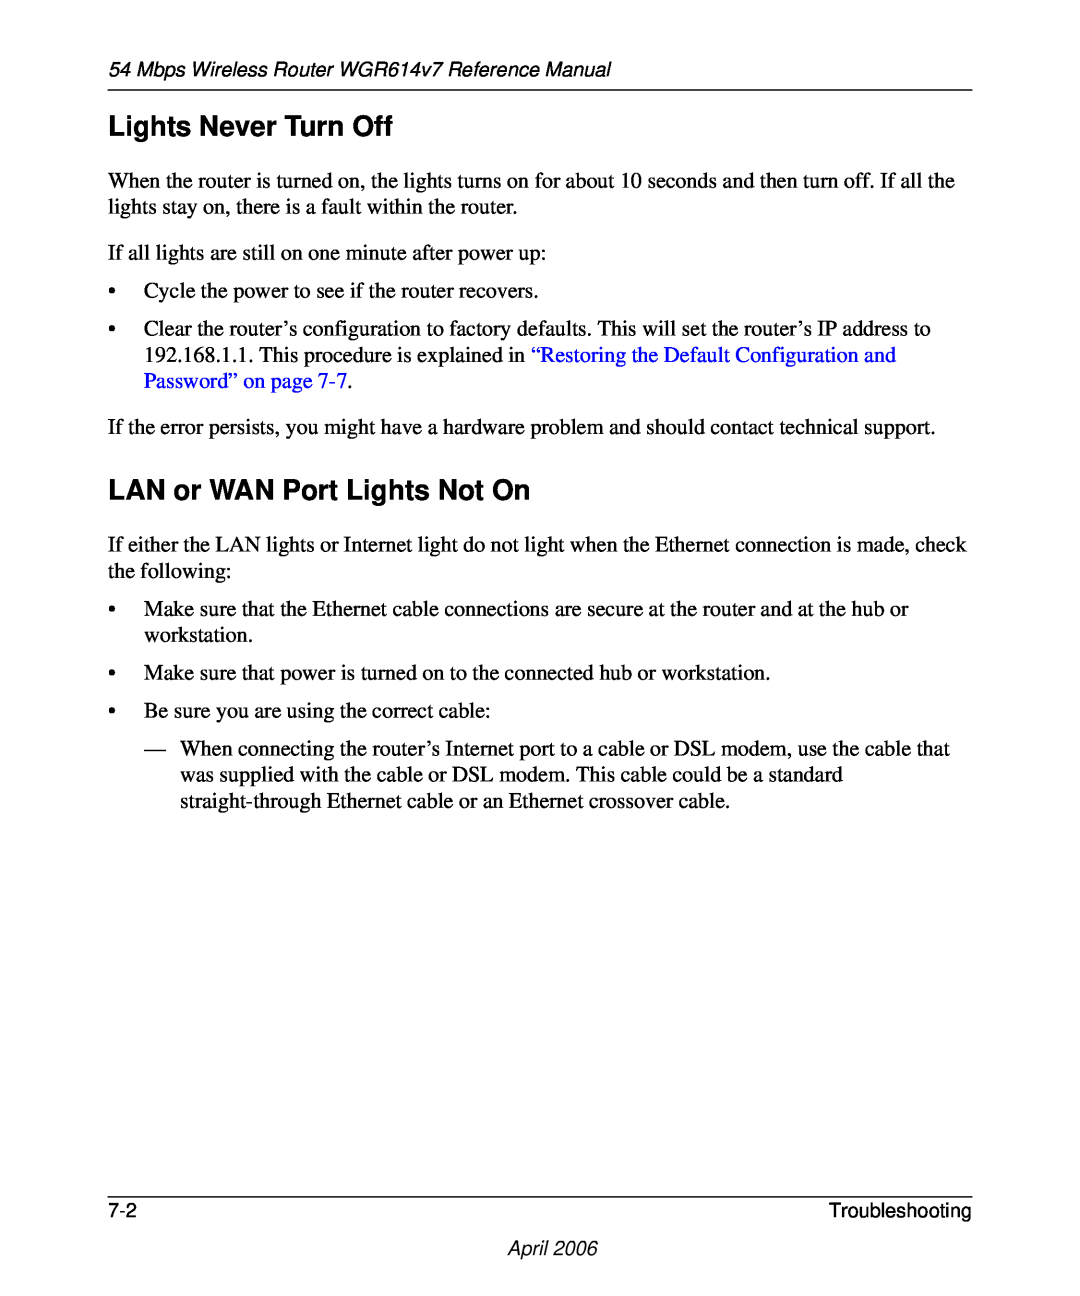 NETGEAR WGR614v7 manual Lights Never Turn Off, LAN or WAN Port Lights Not On 